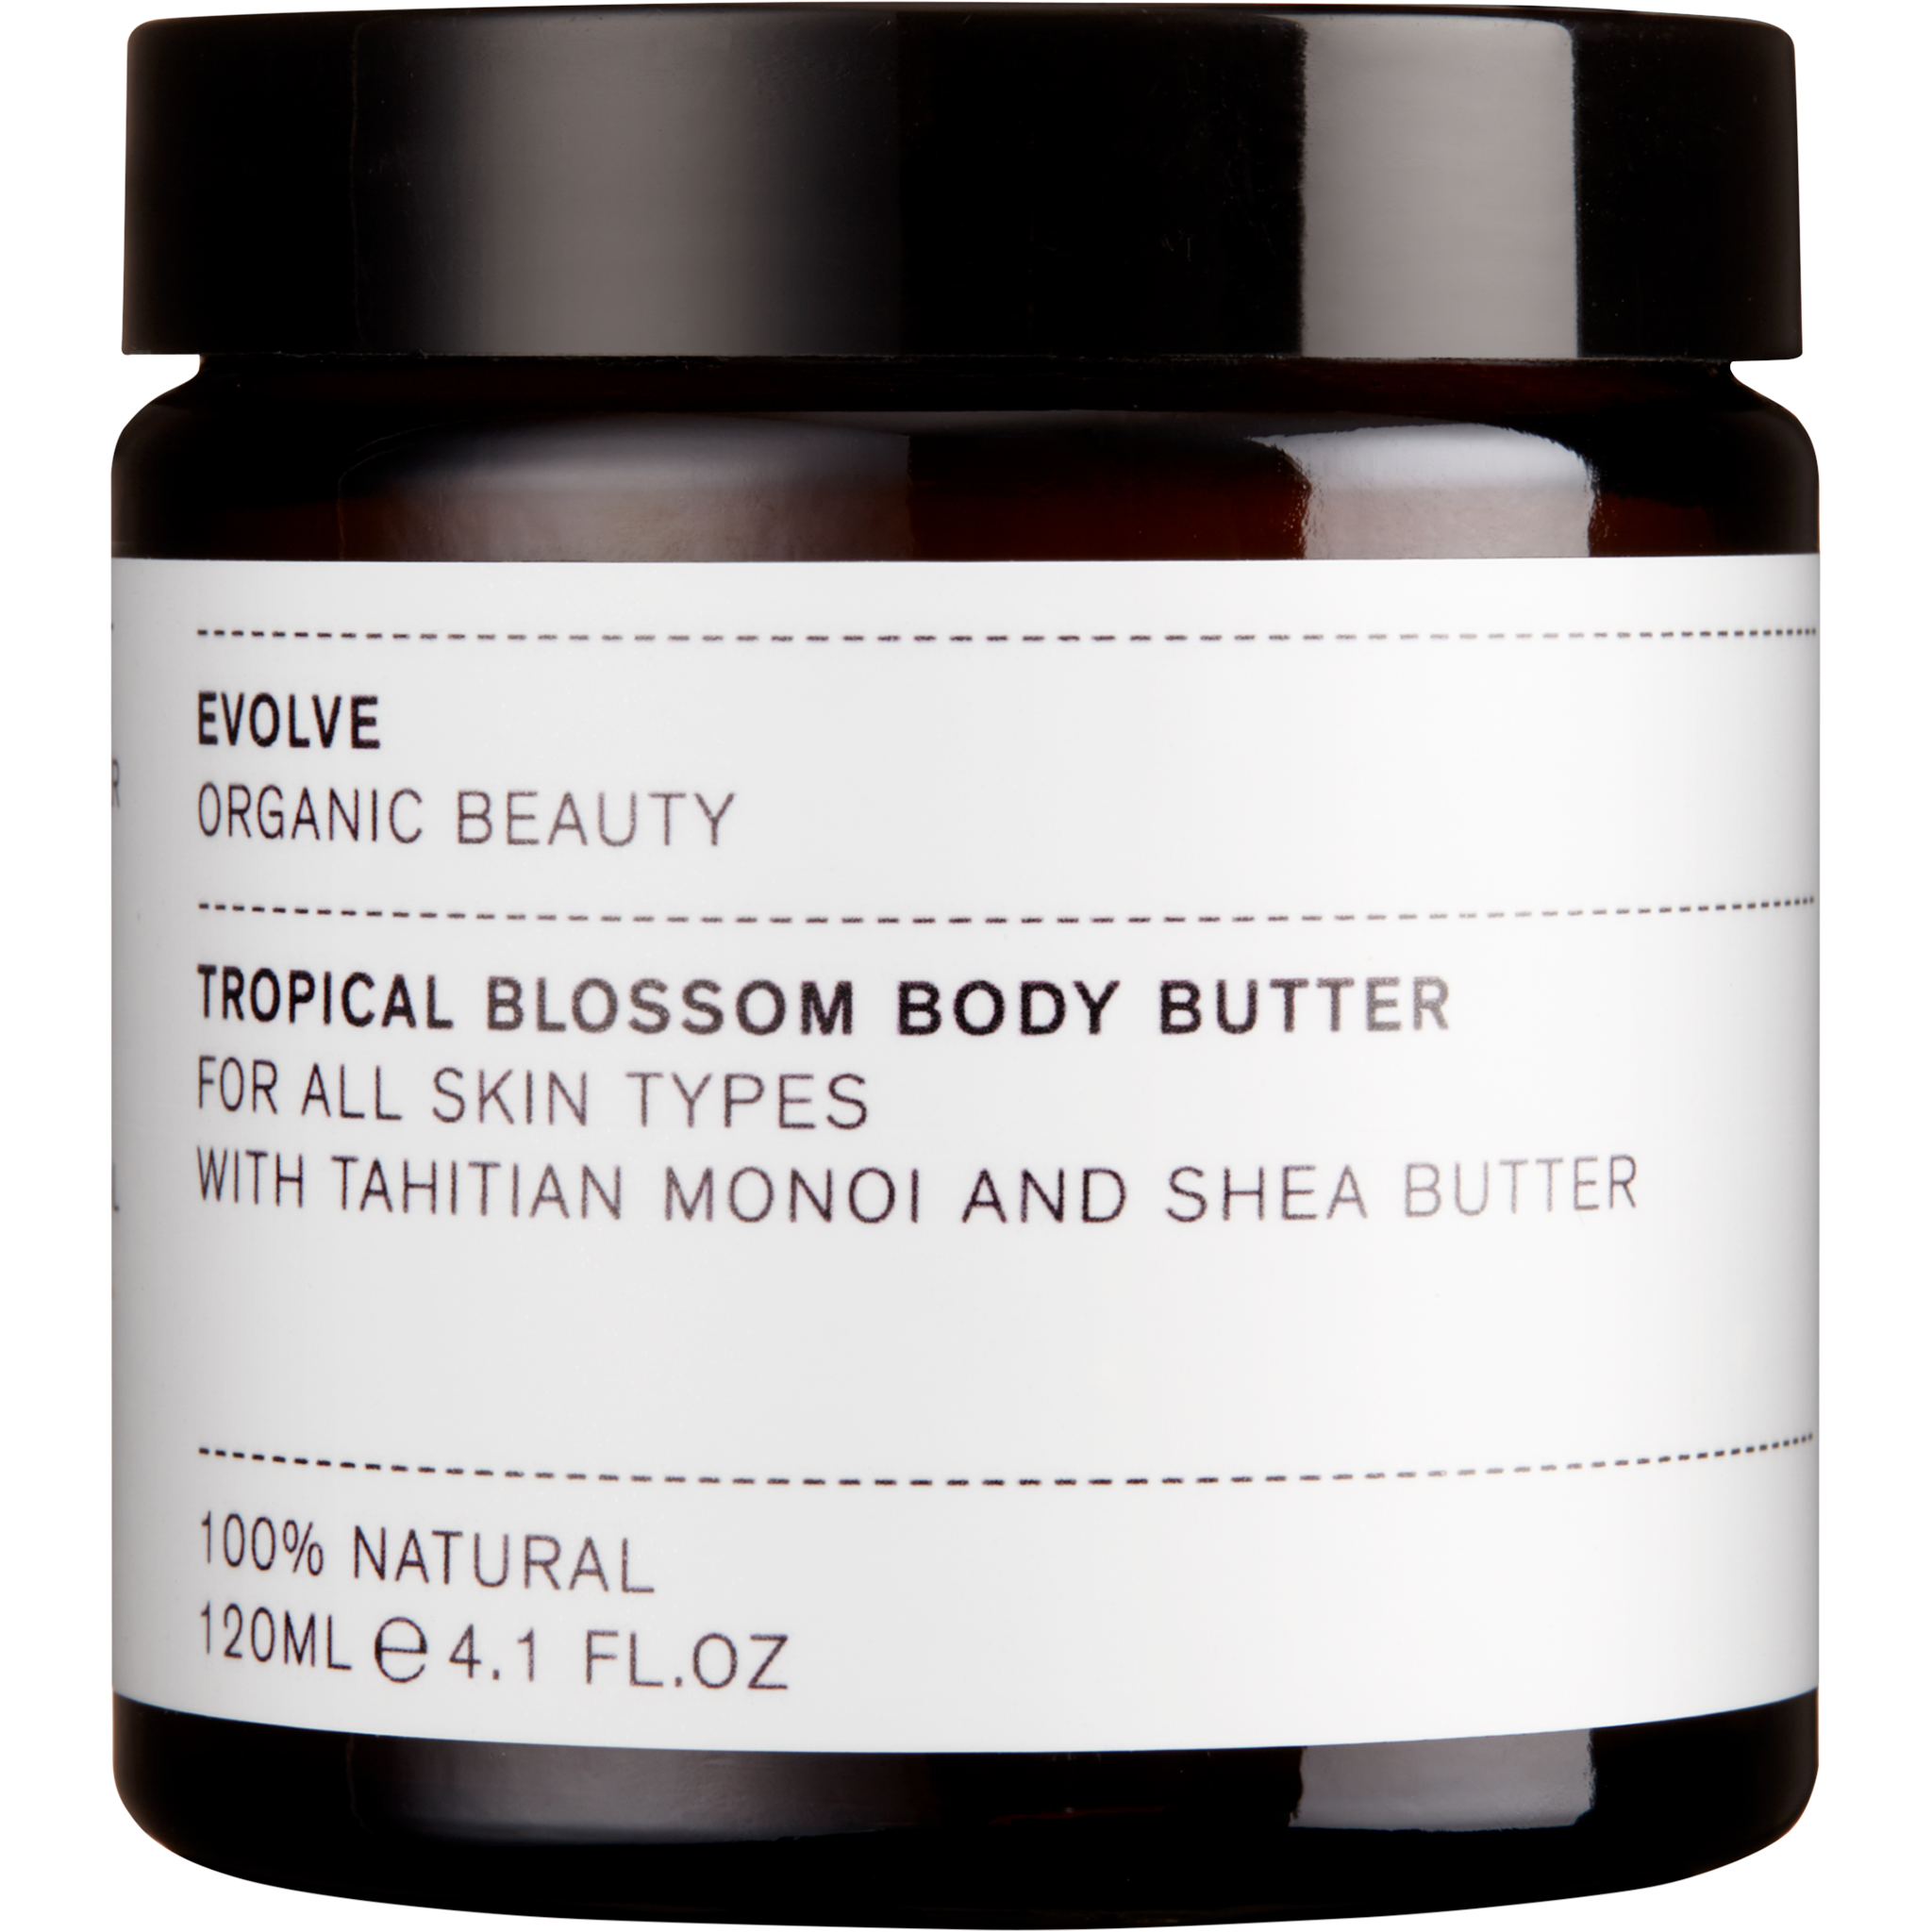 -Tropical Blossom Body Butter